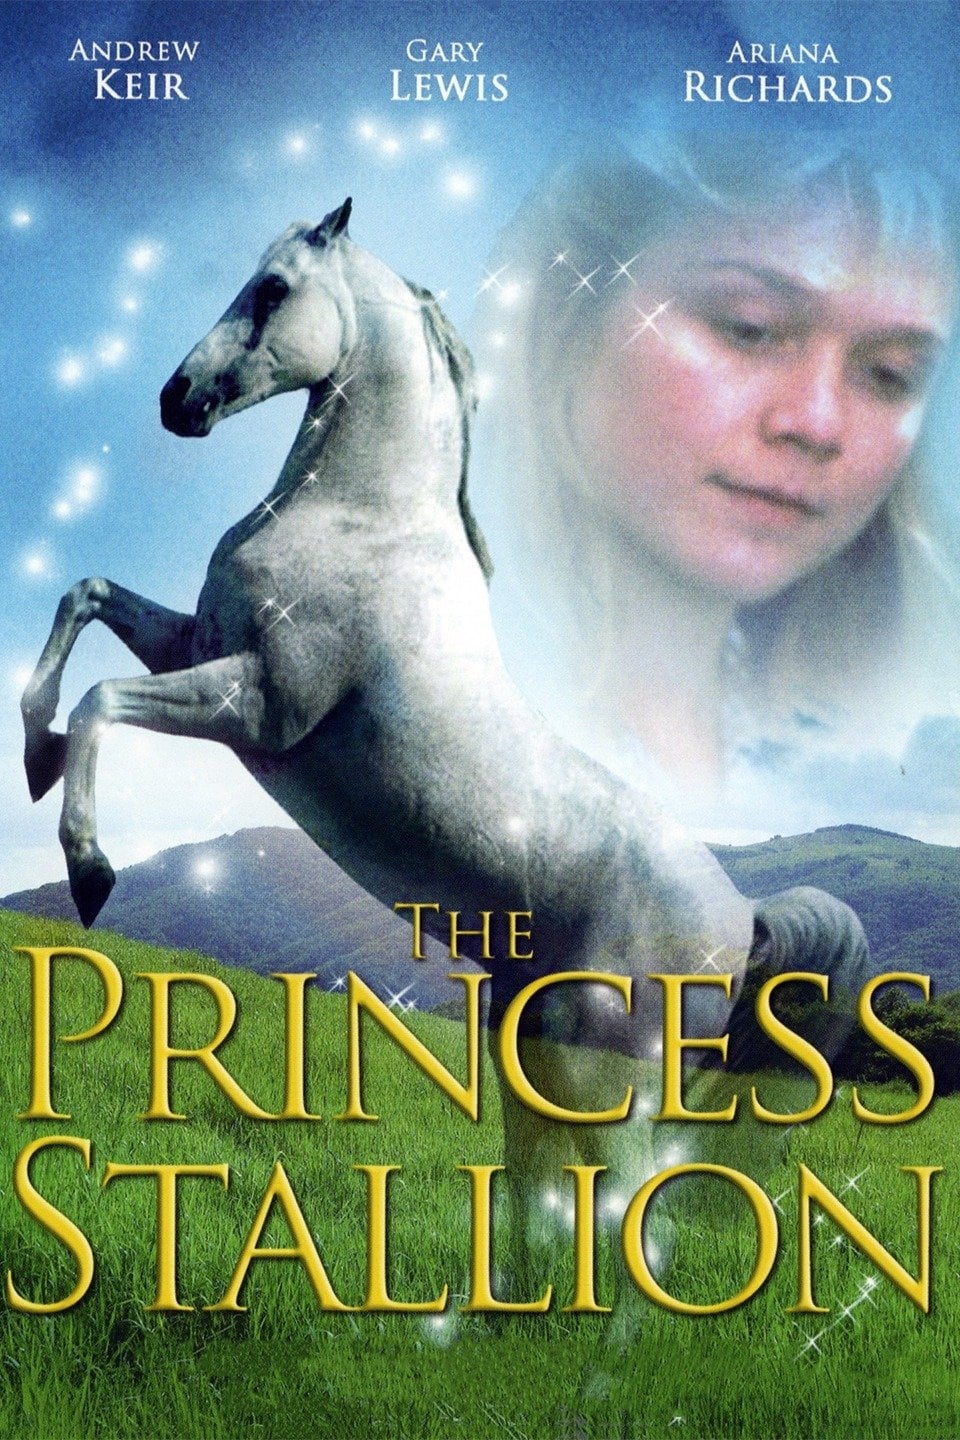 The Princess Stallion streaming